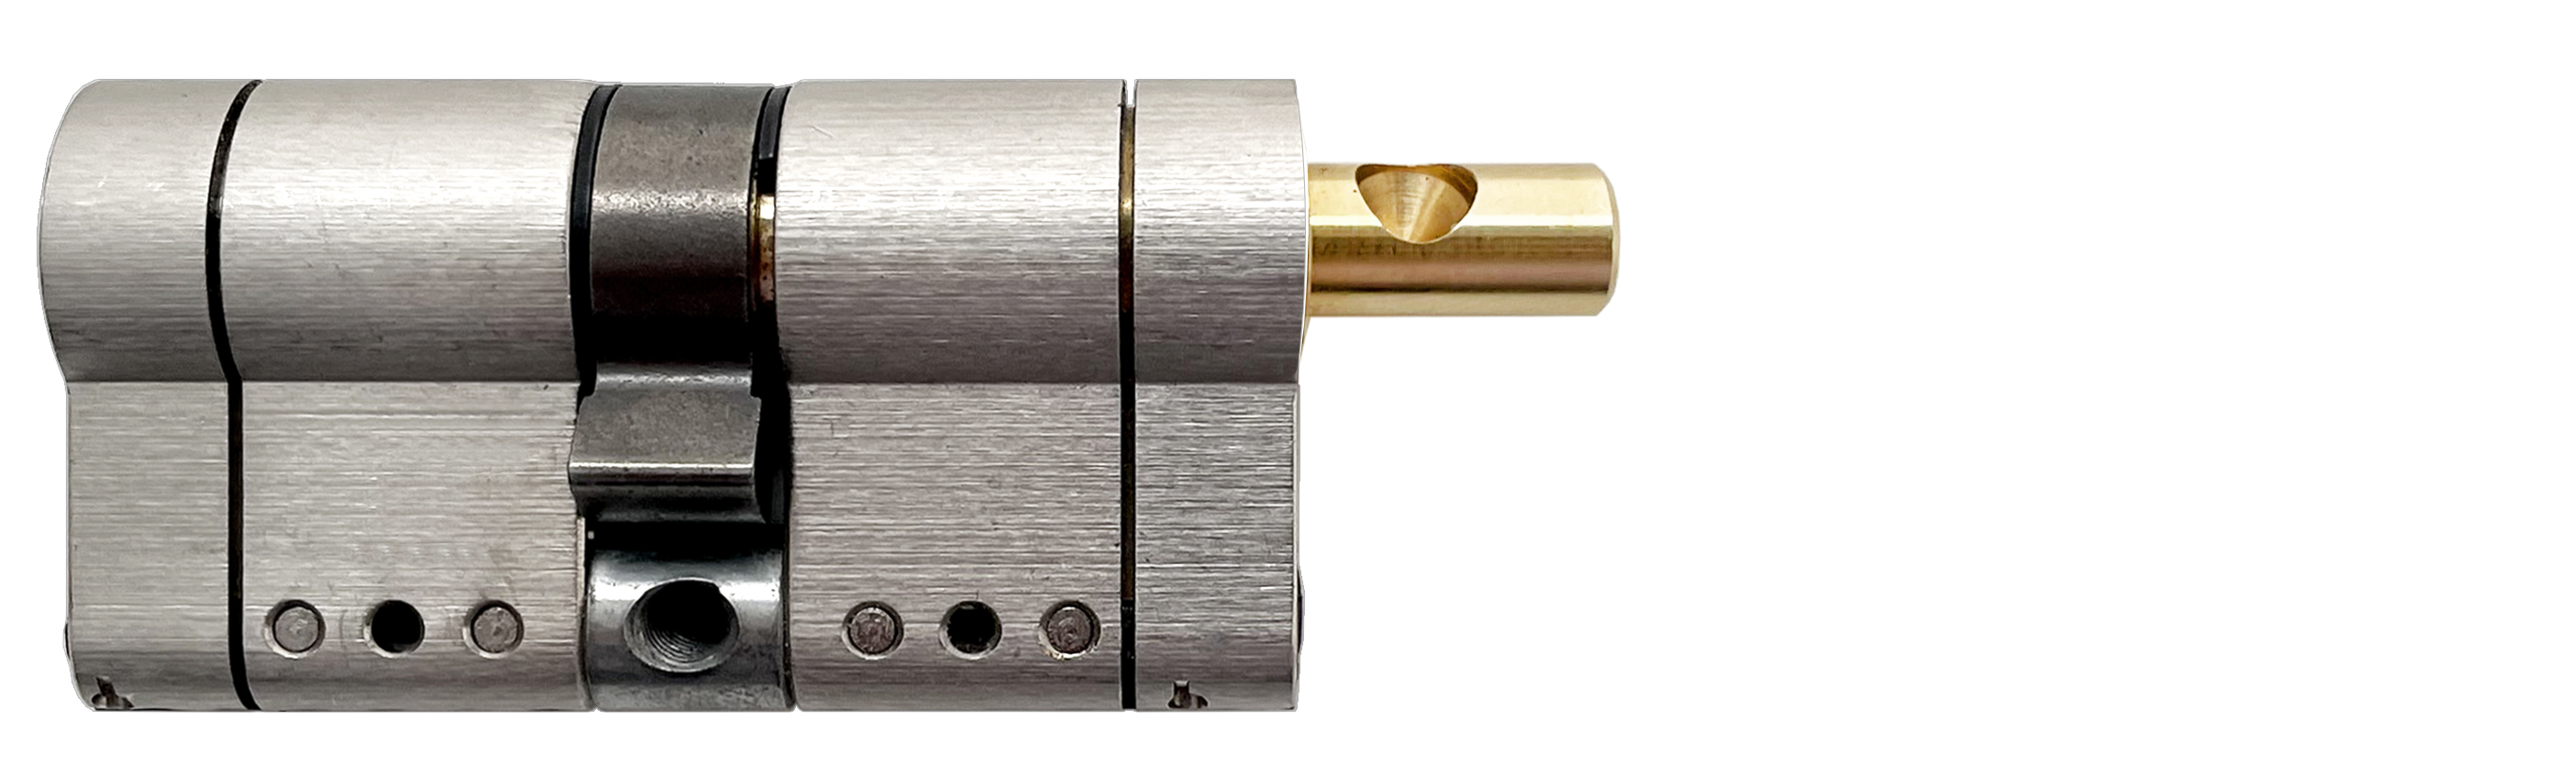 Цилиндр MOTTURA PRO 97(41+56)мм, ключ/вертушка, никель цилиндр mottura pro 87 41 46 мм ключ вертушка никель